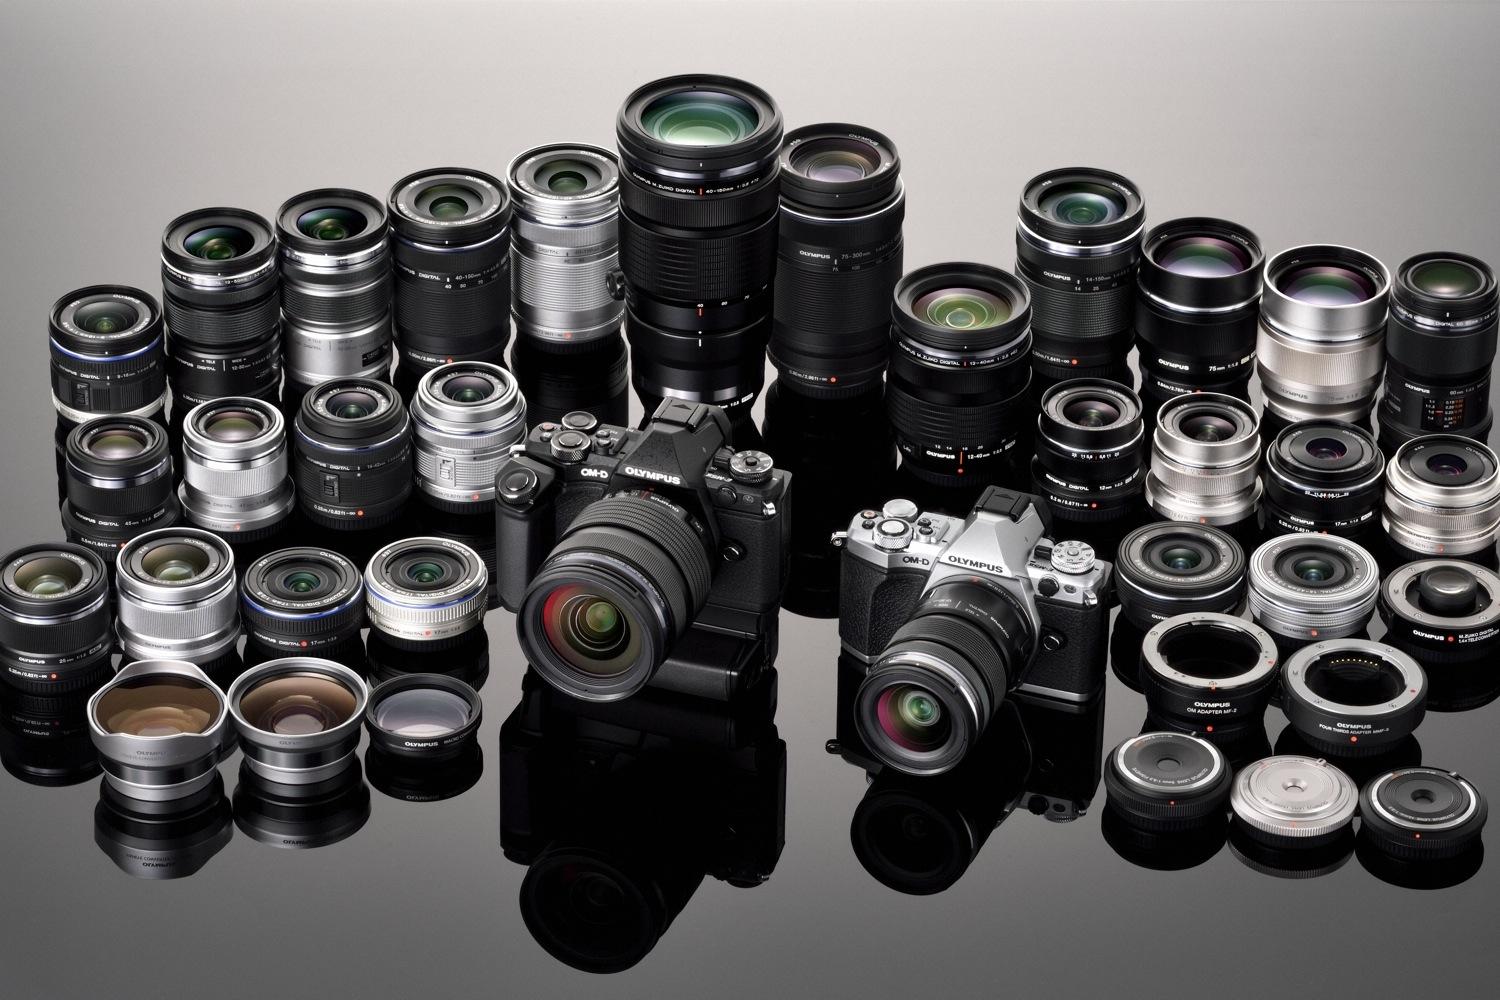 olympus e m5 mark ii puts focus movie stabilization 40 megapixel photos m5markii zuiko lenses